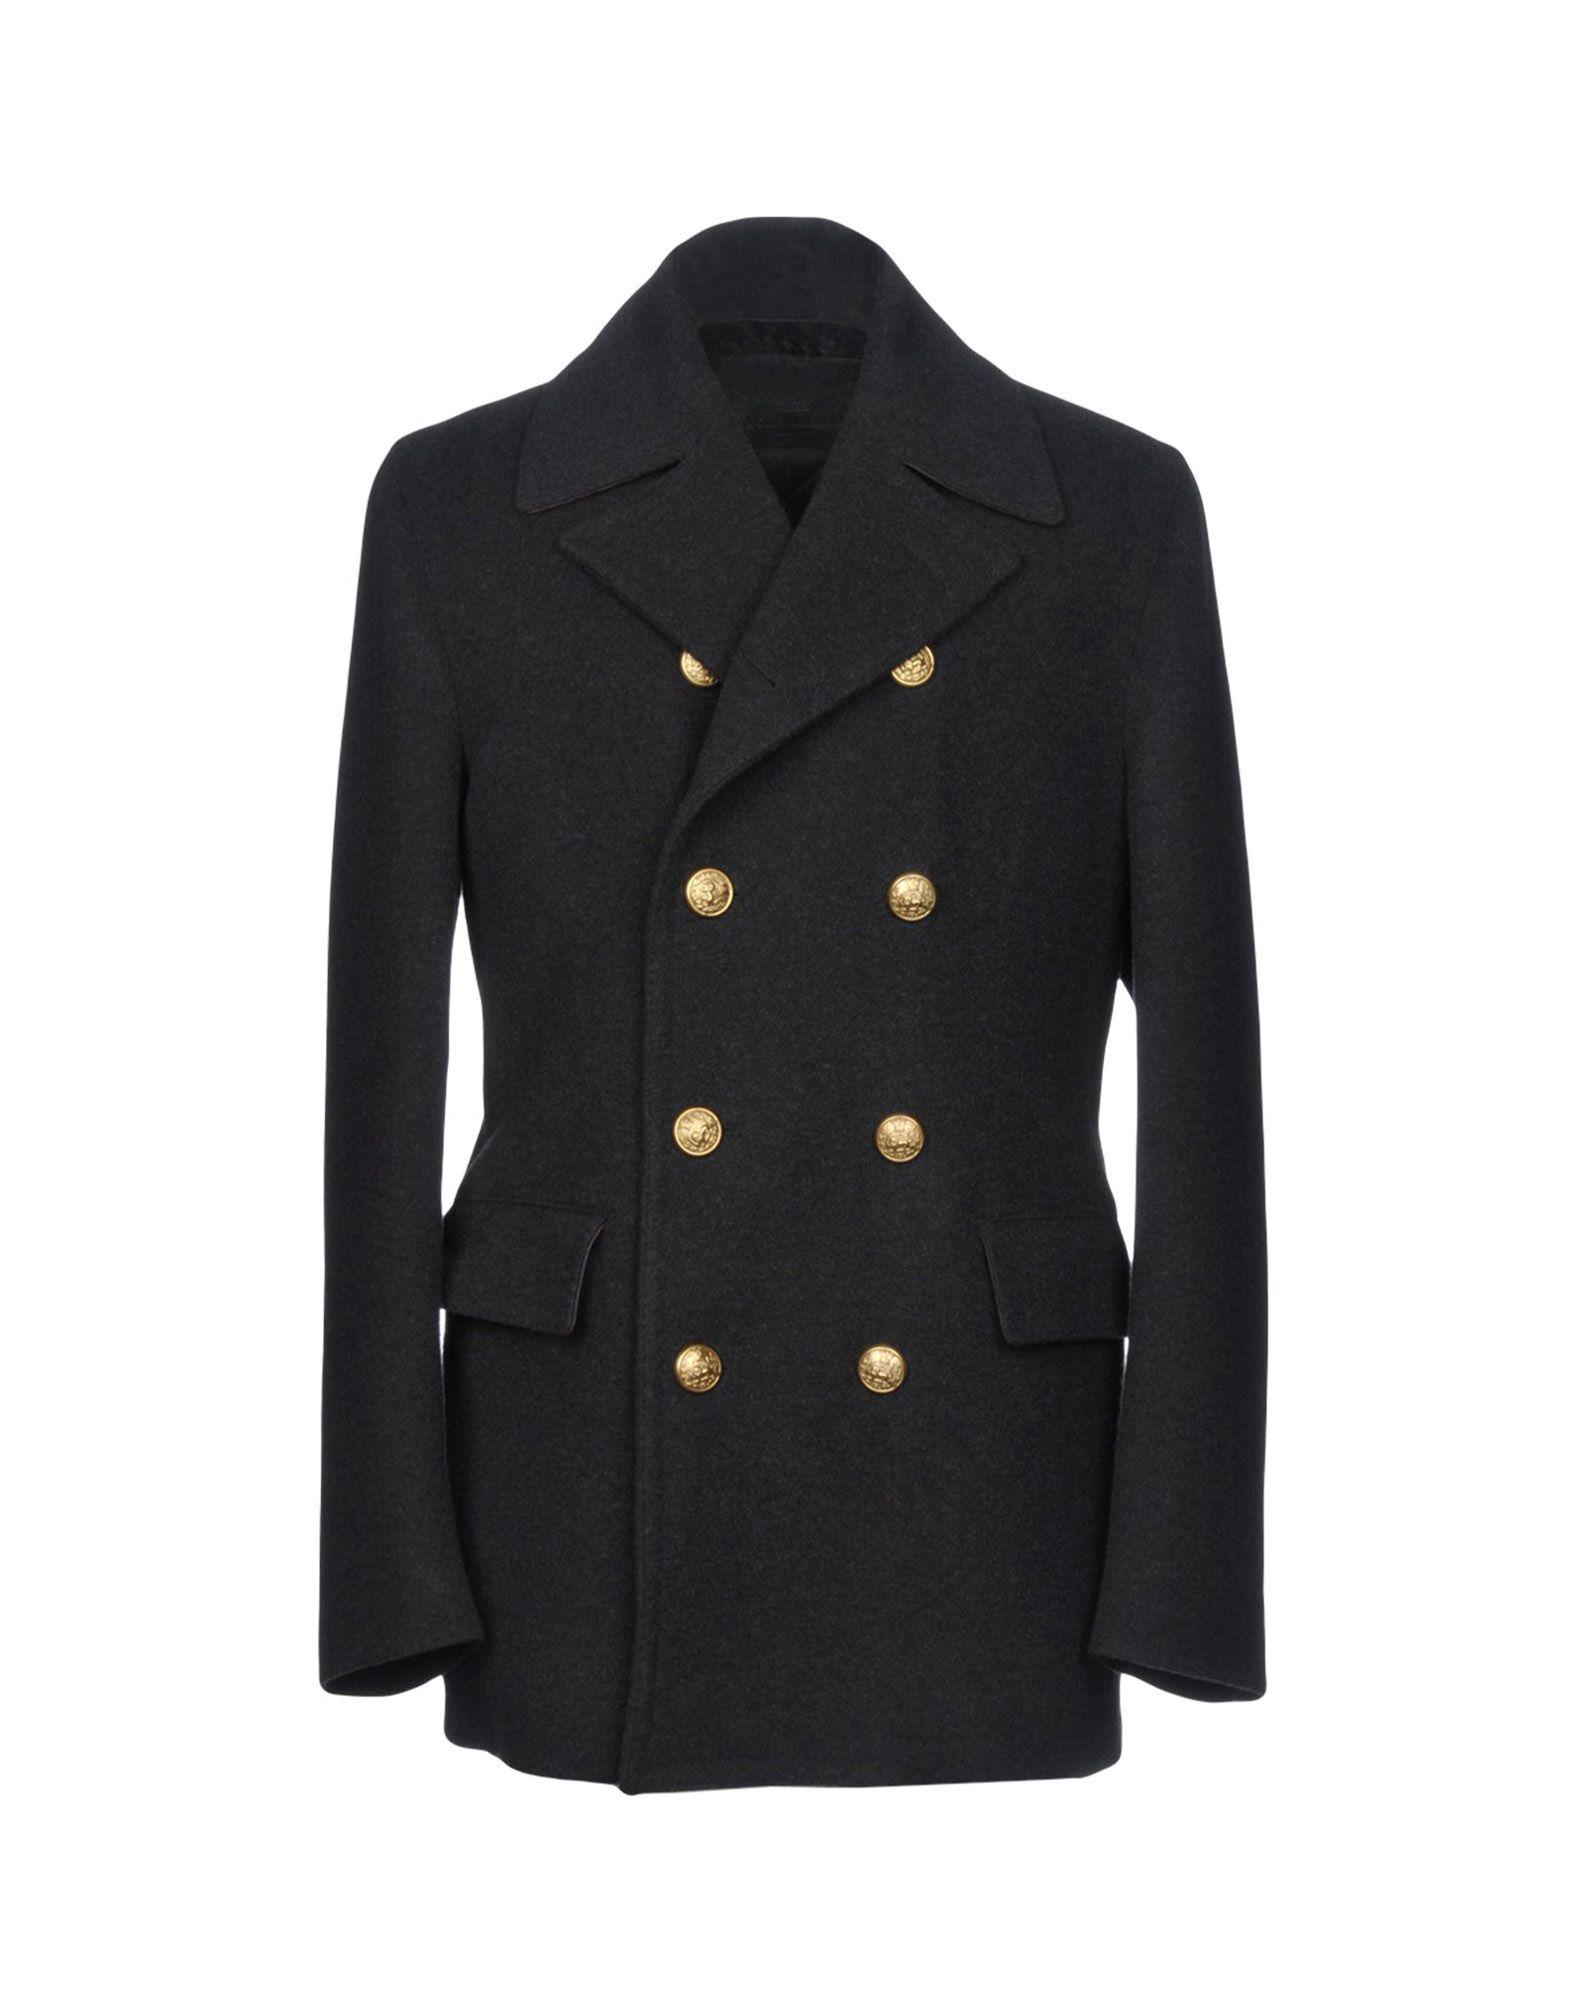 Dolce & Gabbana Wool Coat in Black for Men - Save 18% - Lyst